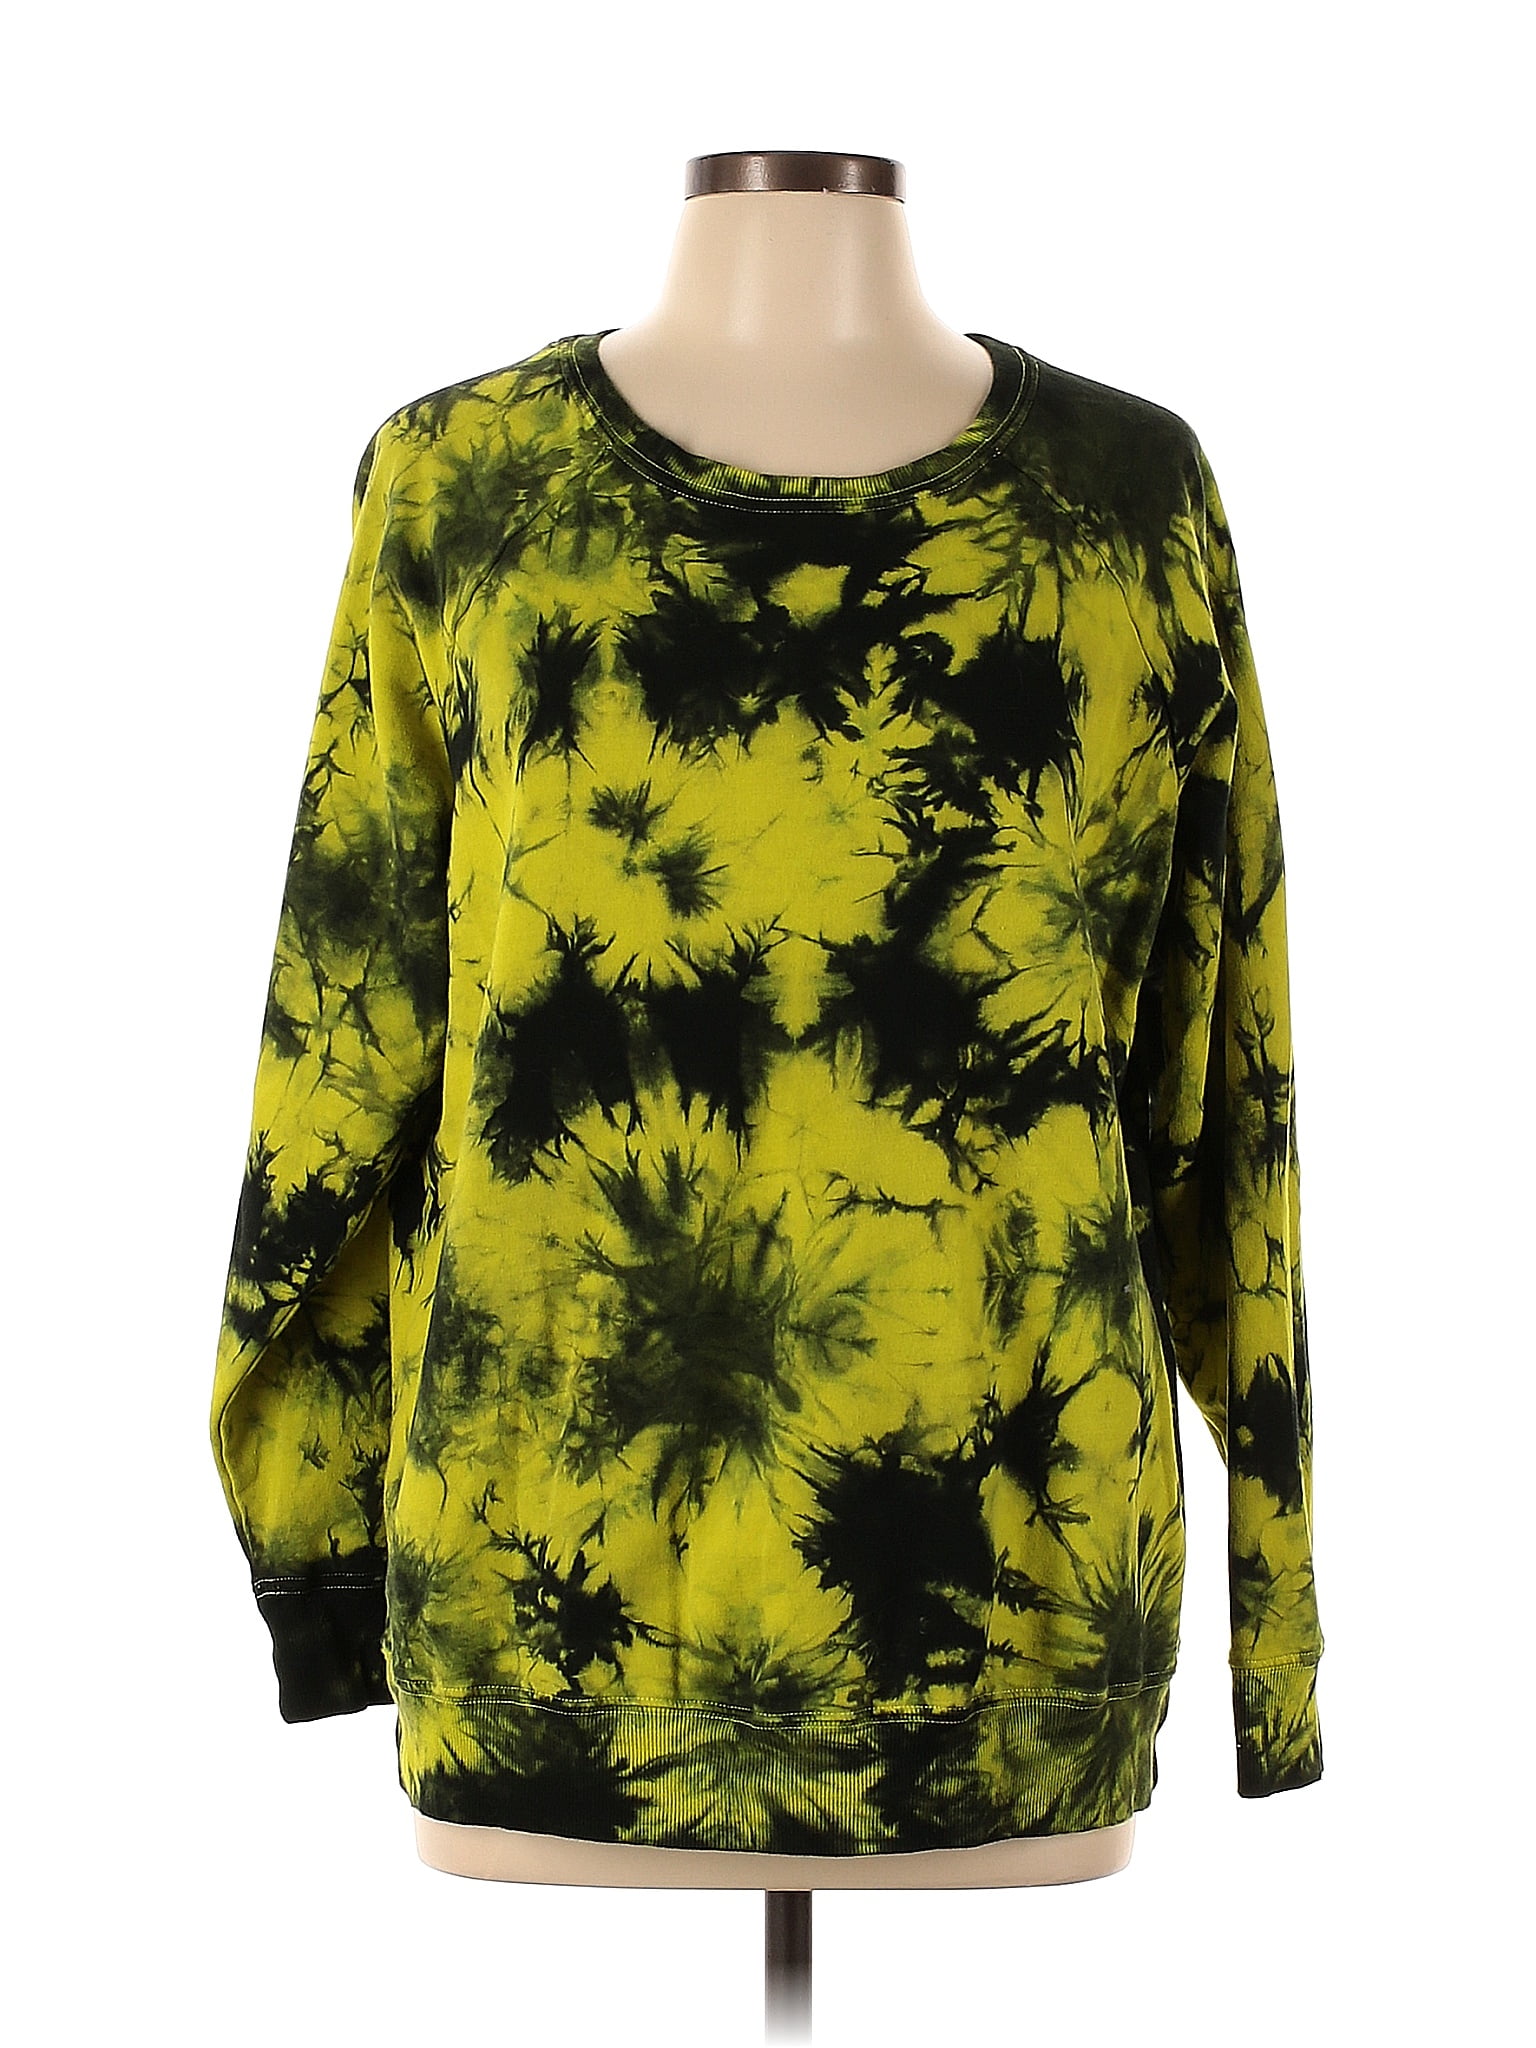 Torrid Color Block Green Sweatshirt Size Lg Plus (0) (Plus) - 58